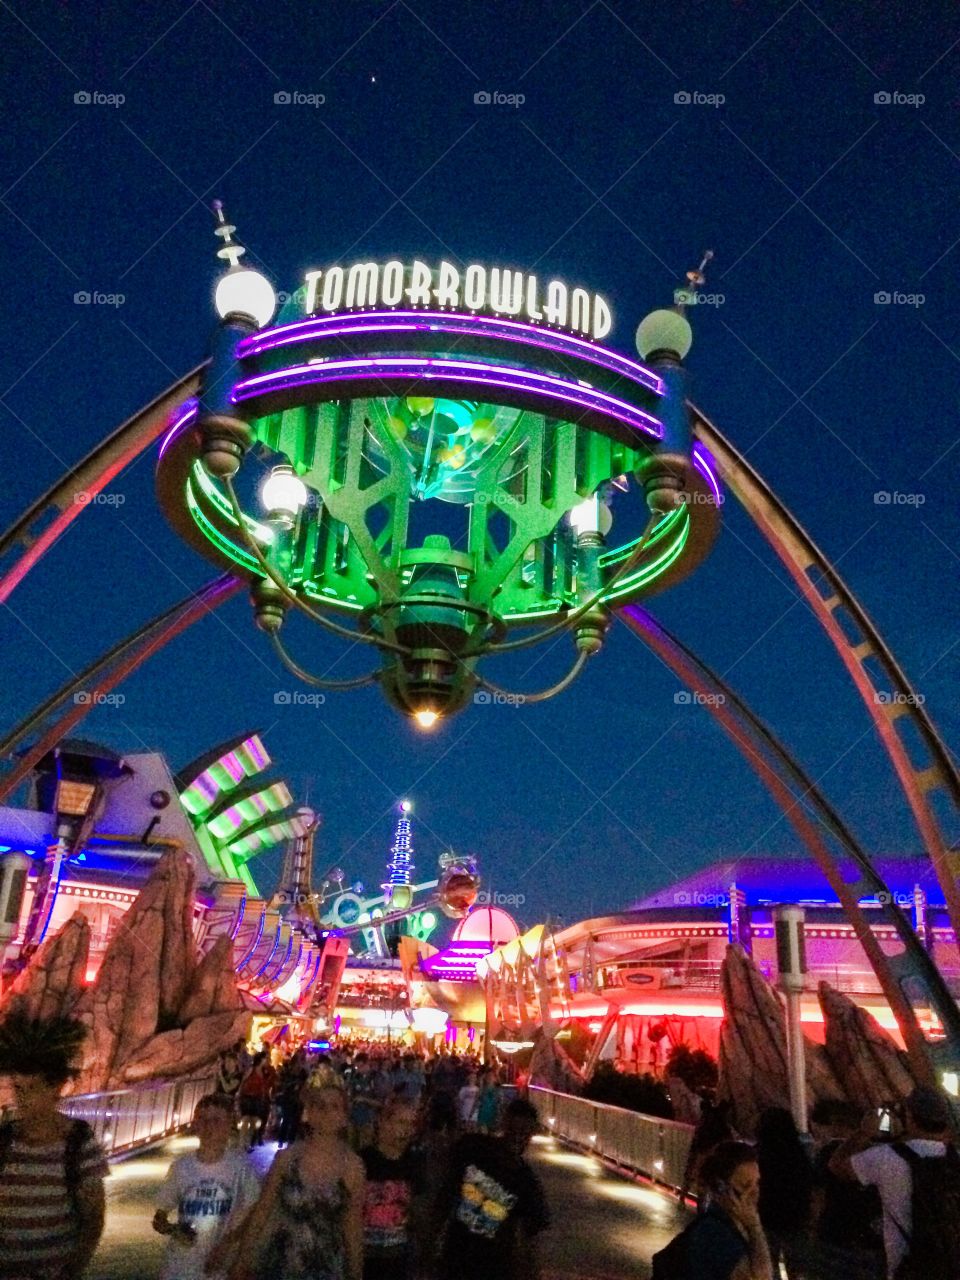 Tomorrowland Disney World. It's dusk. The neon is a glow as you enter Tomorrowland. 